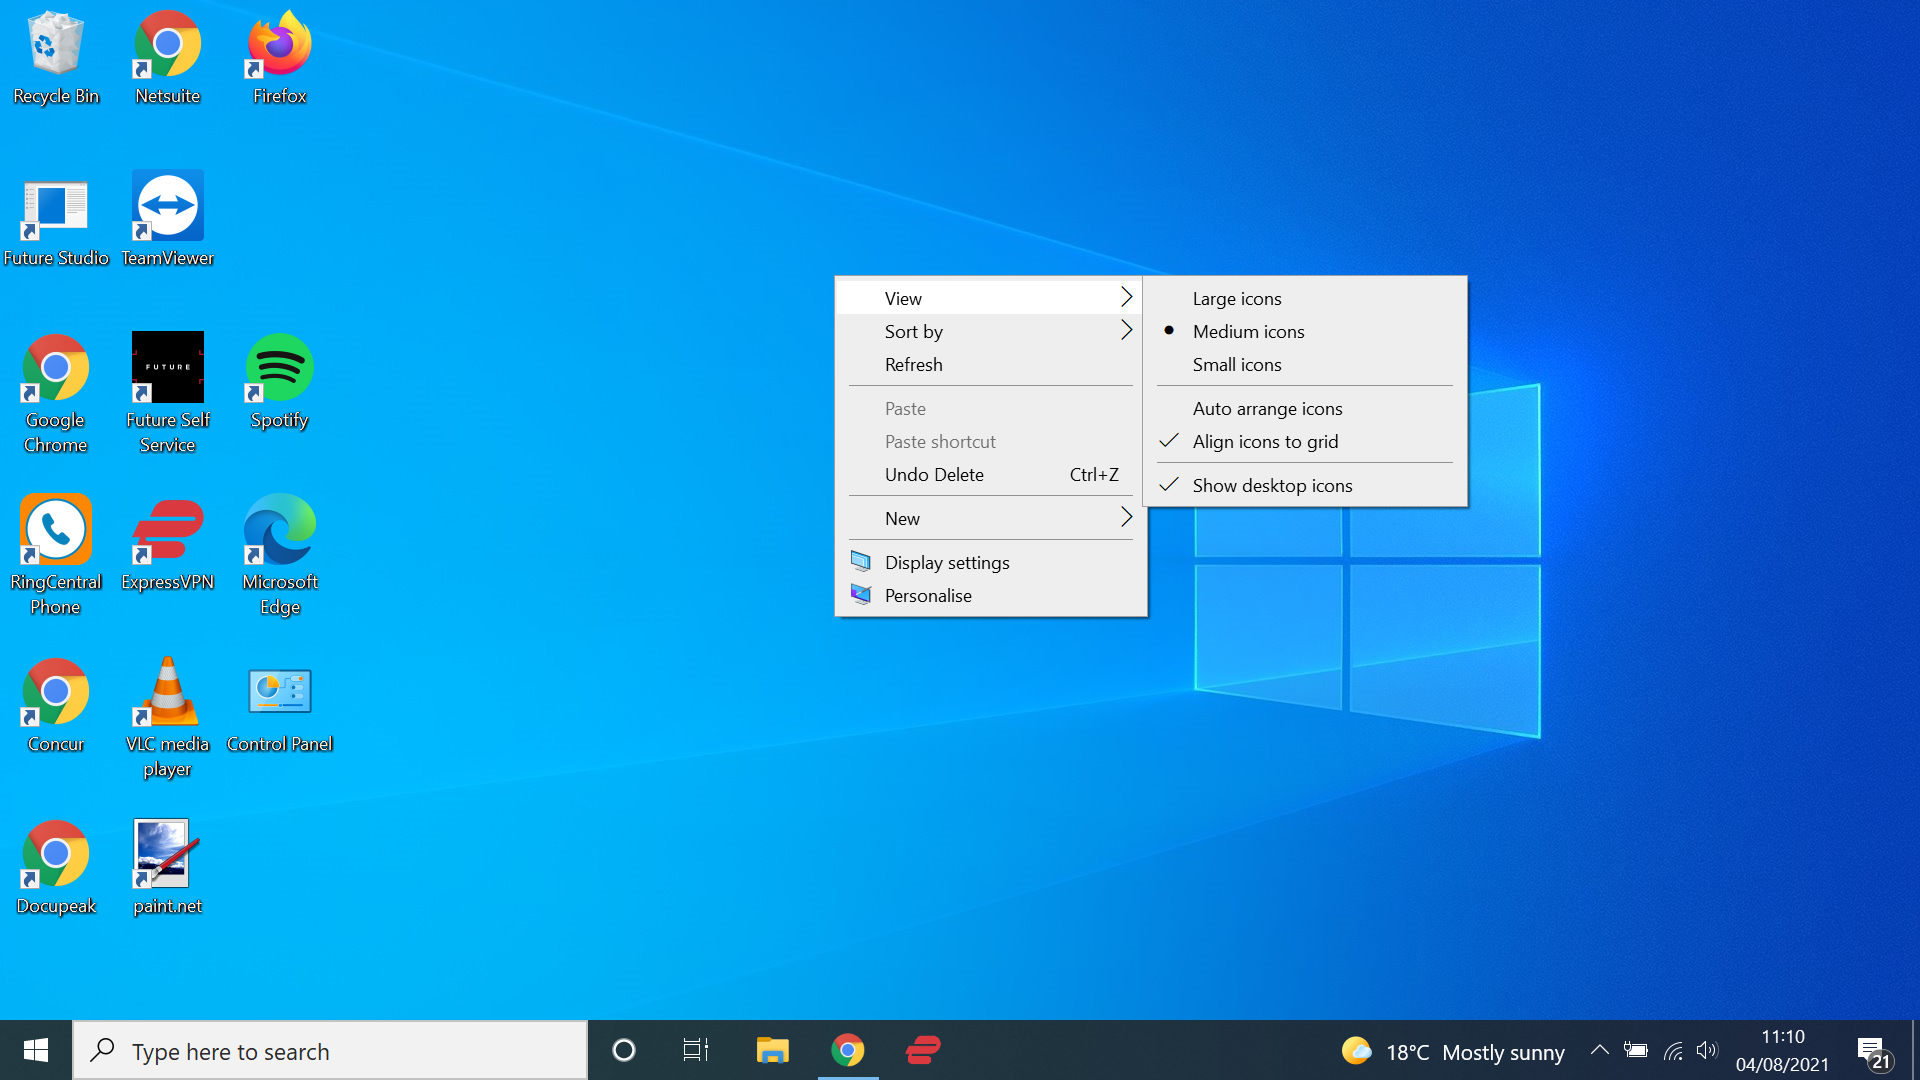 How to hide desktop icons in Windows - show desktop icons